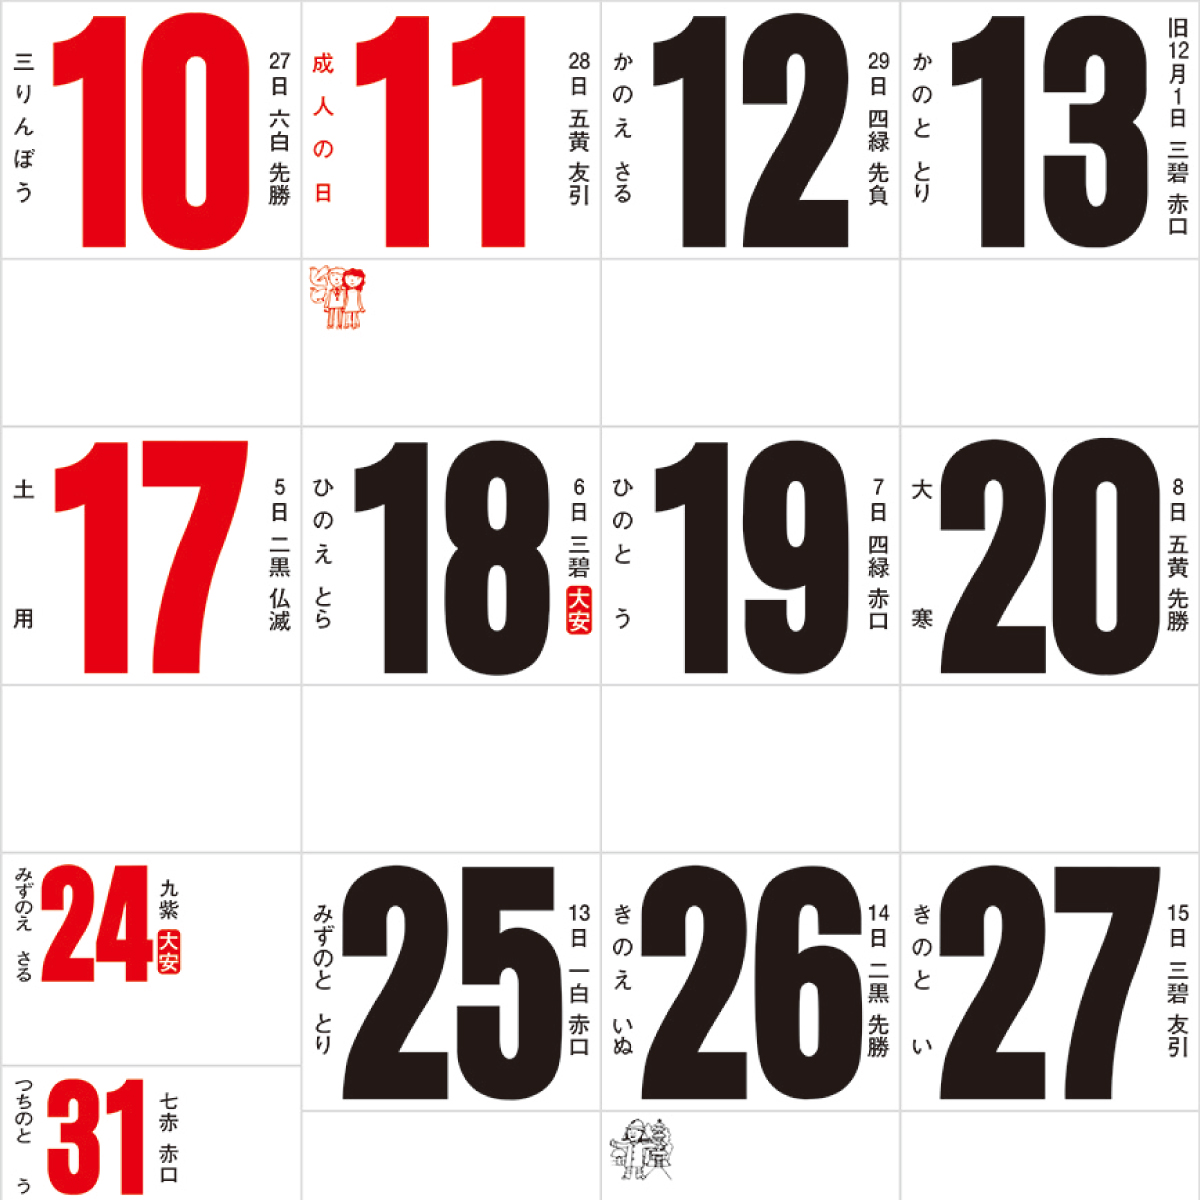 Nk178 文字月表 21年カレンダー 文字月表 イラスト無し 名入れカレンダー製作所 By レスタス